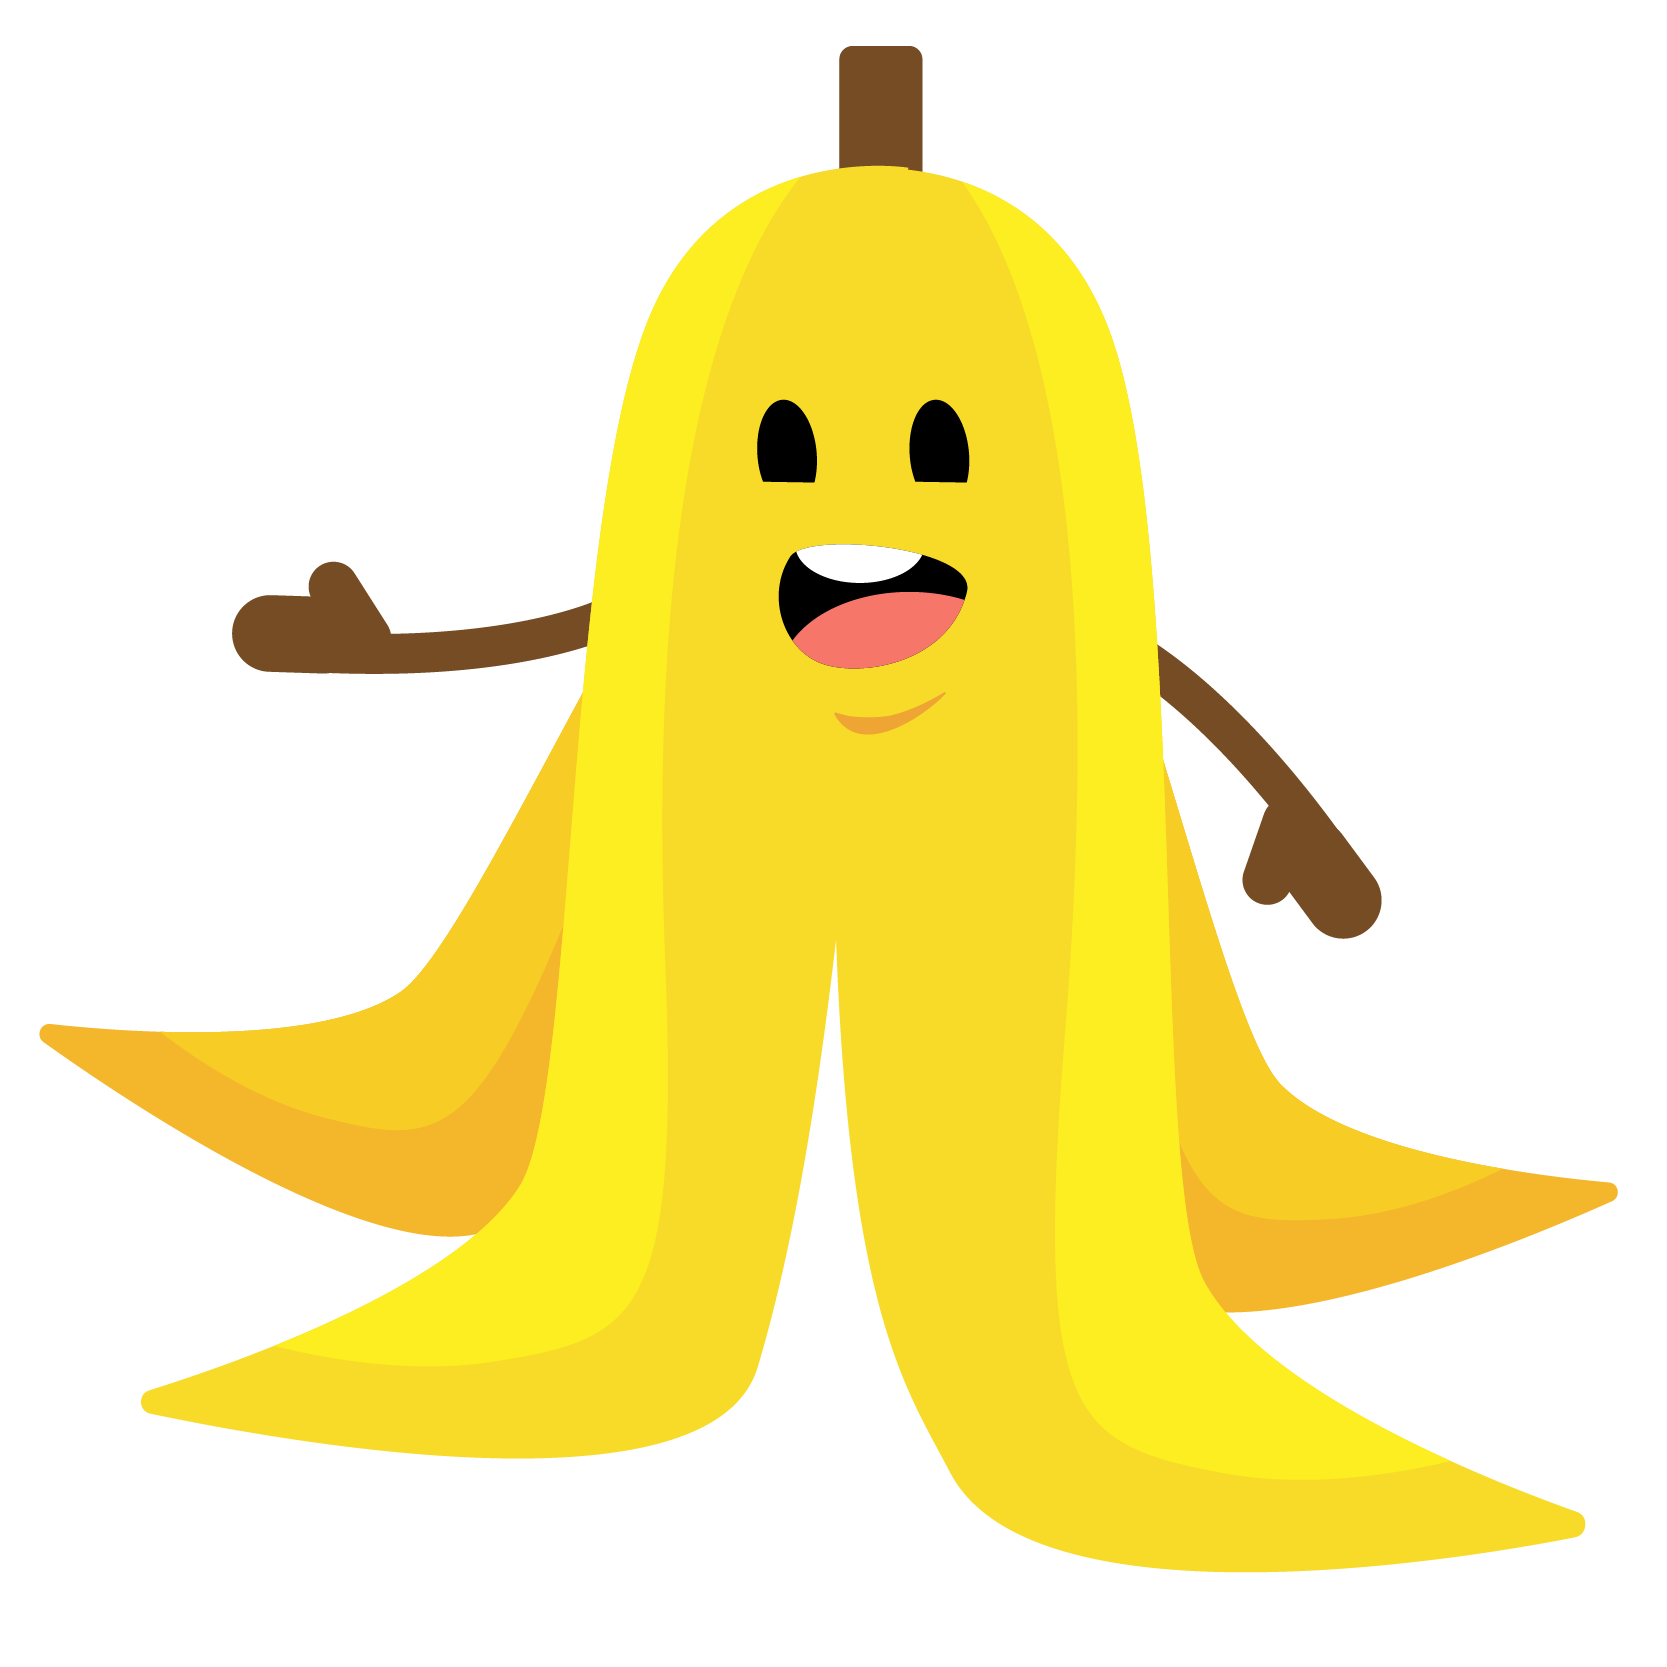 banana graphic smiling